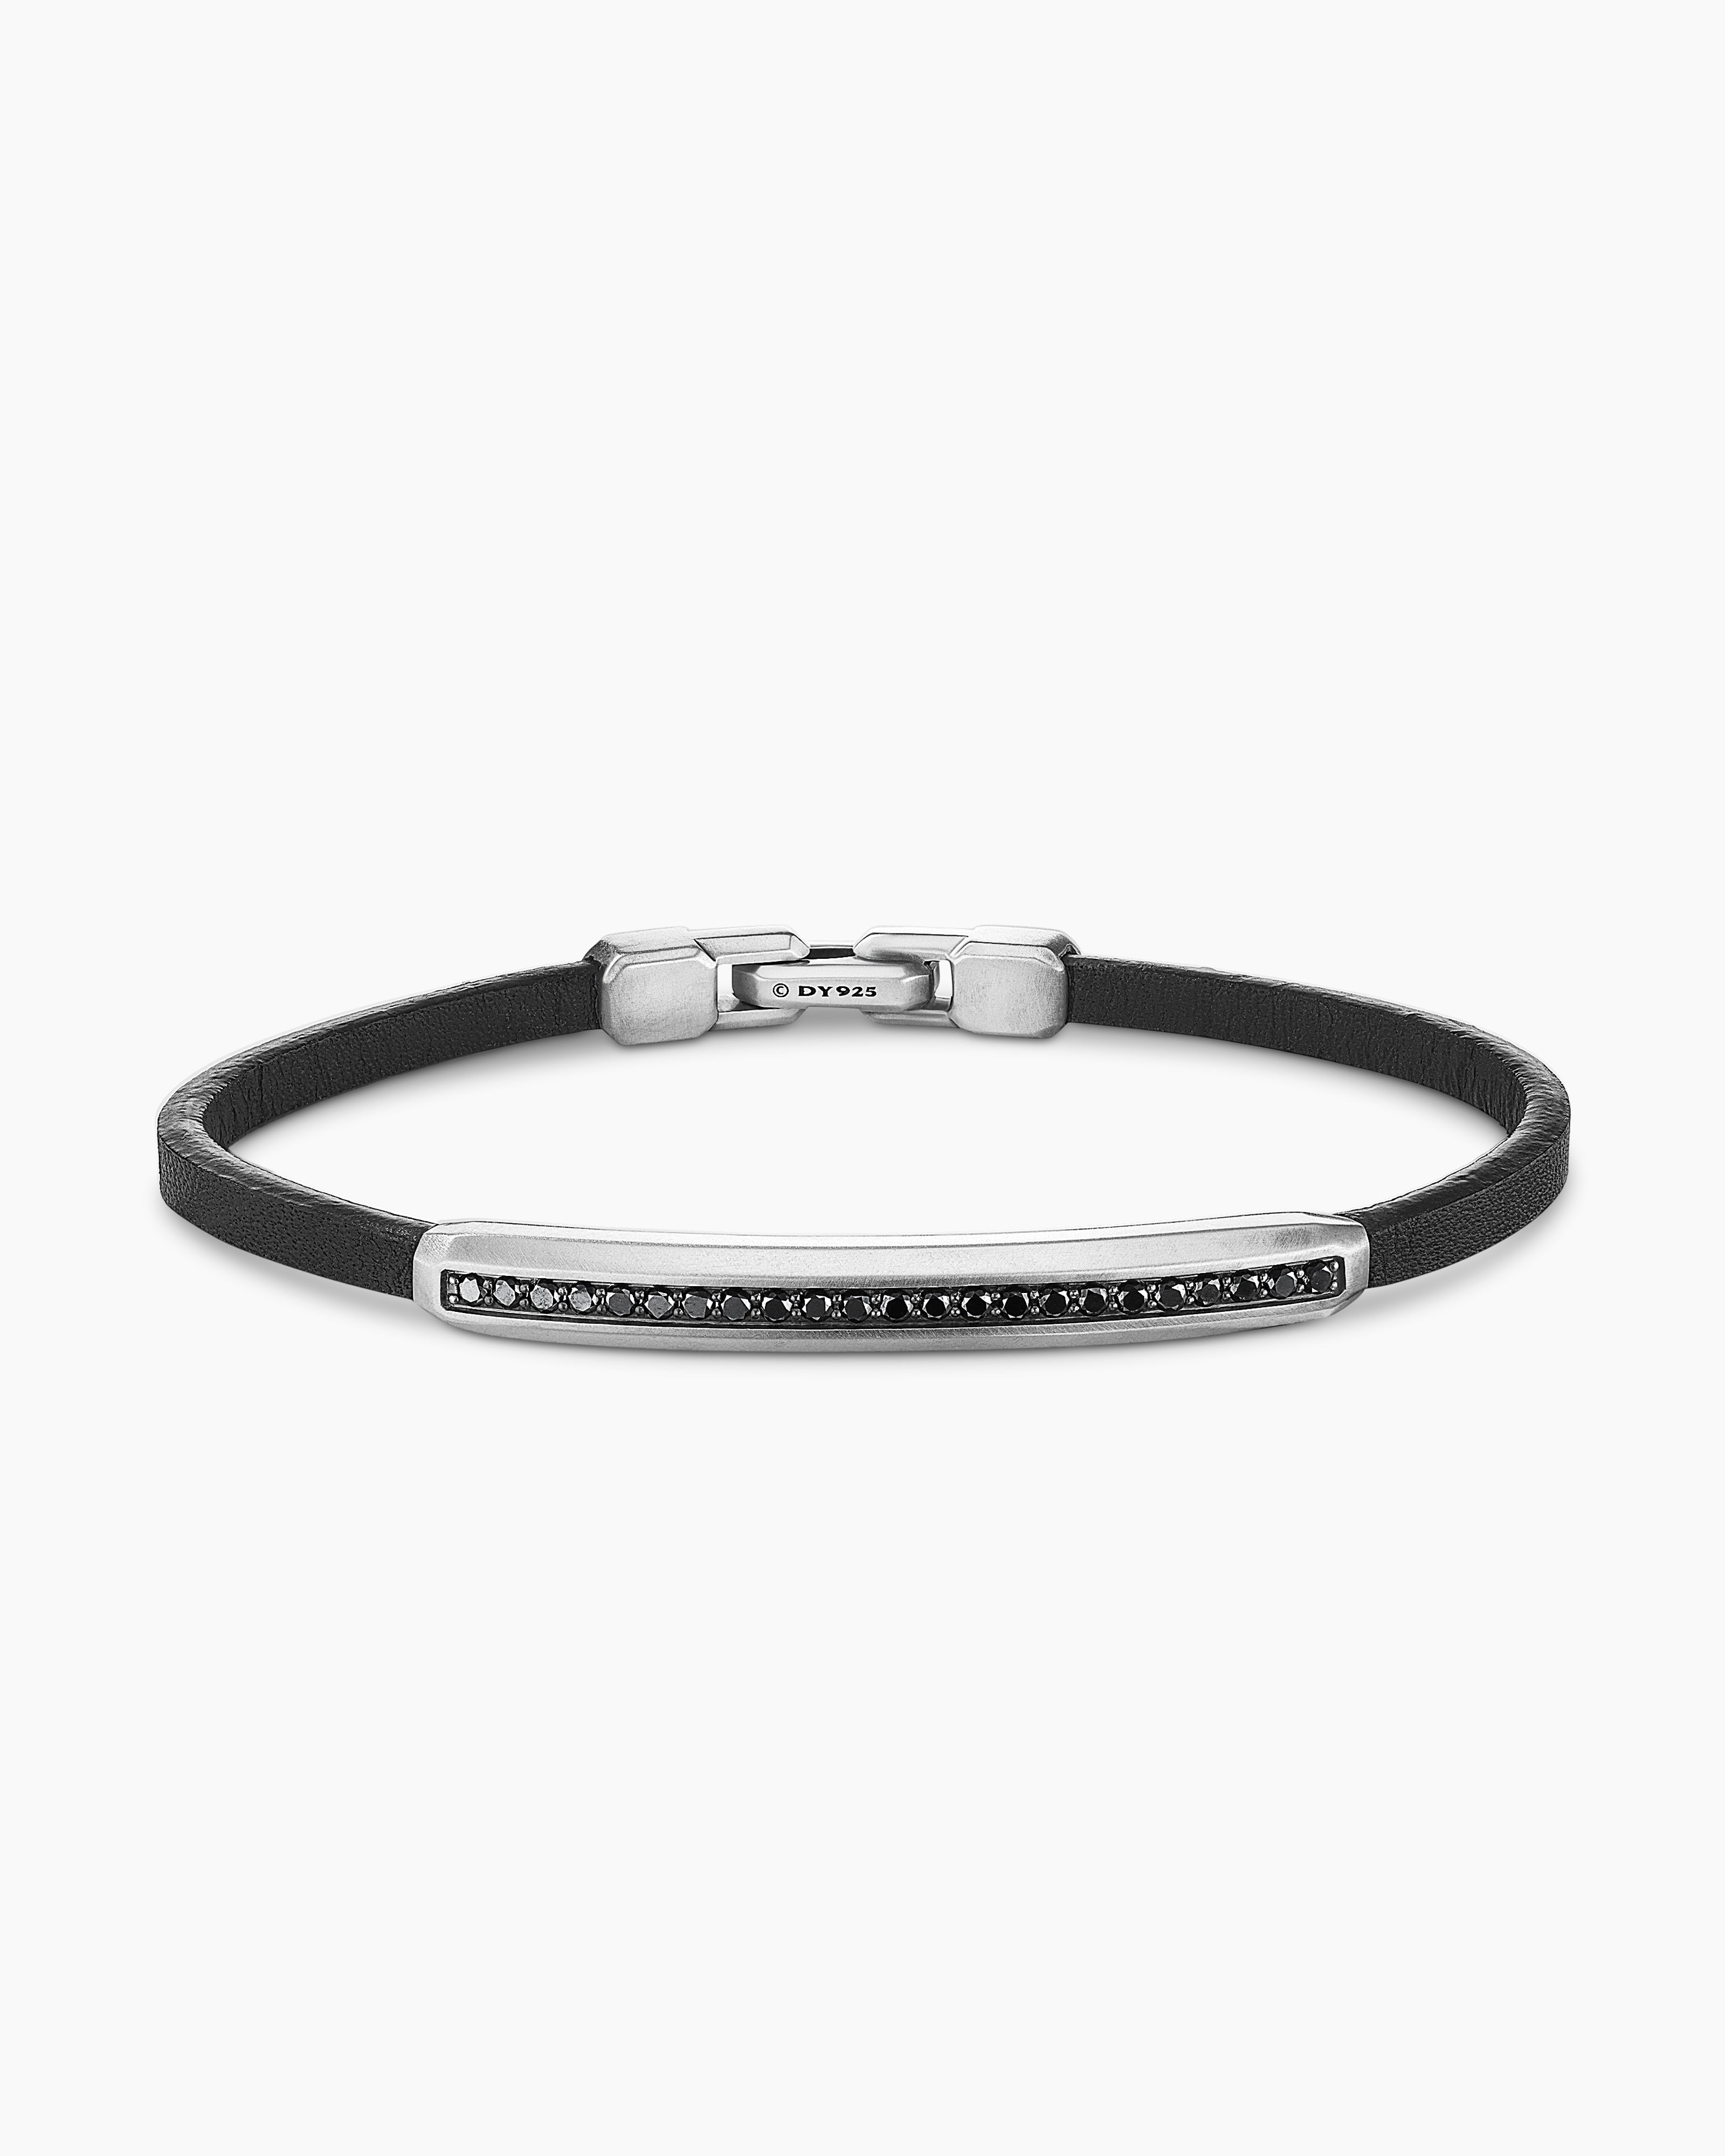 Buy Oxidised Black Allure 925 Silver Bracelet with Rhodium and Lacquer  Coating Online - Ranka Jewellers – RANKA JEWELLERS